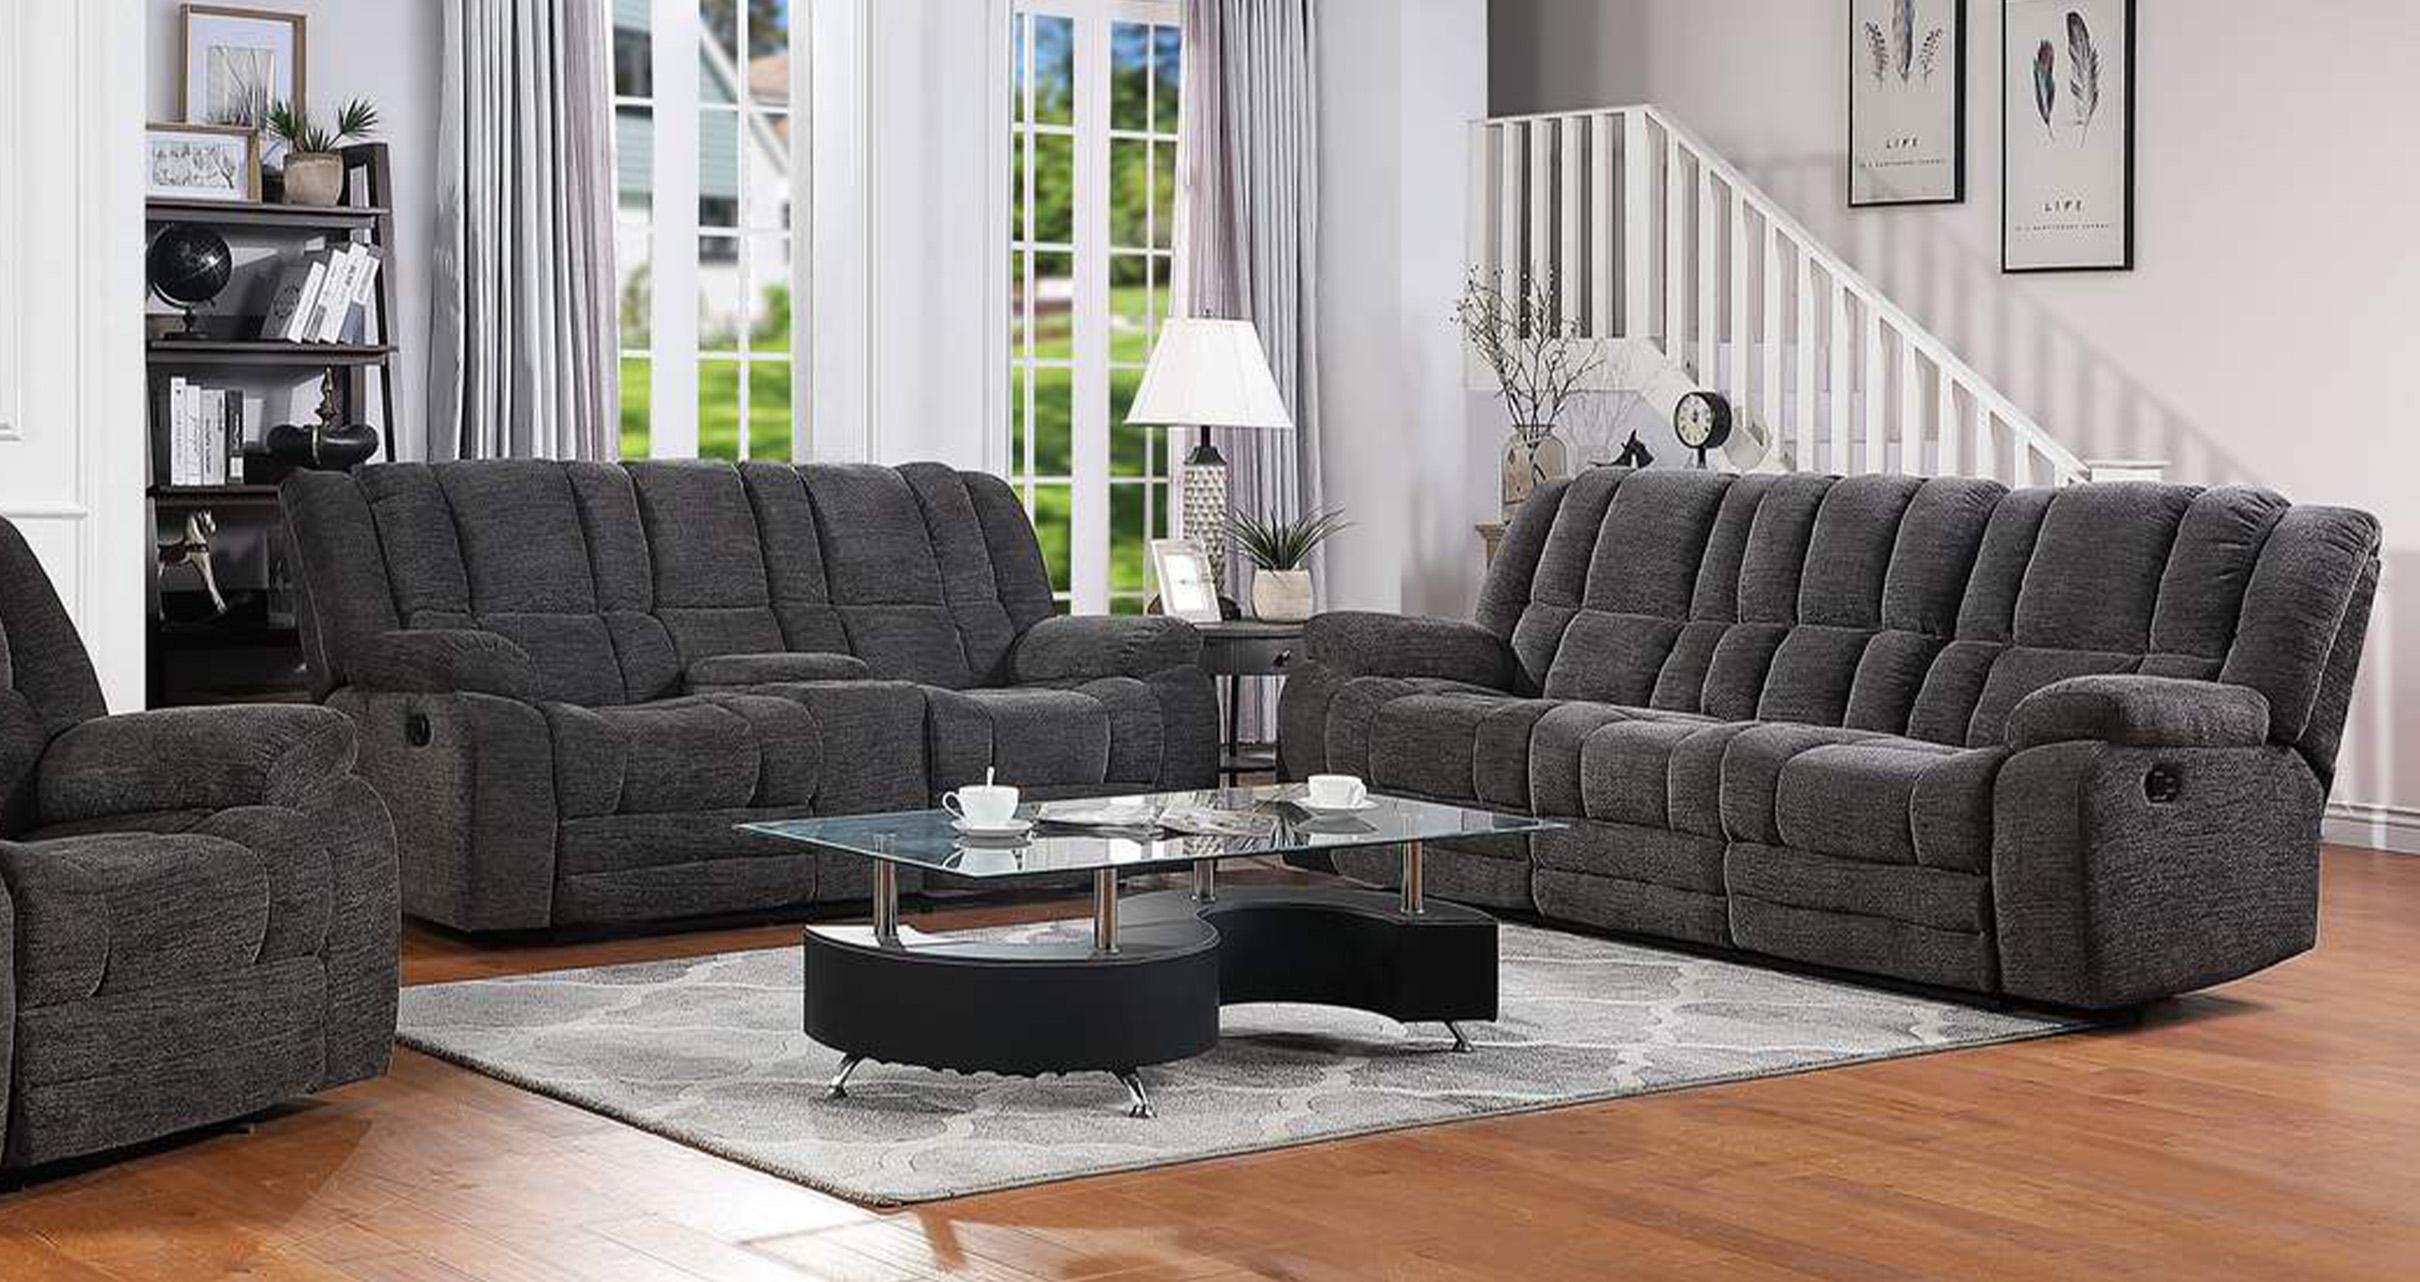 Galaxy Home Furniture CHICAGO Recliner Sofa Set